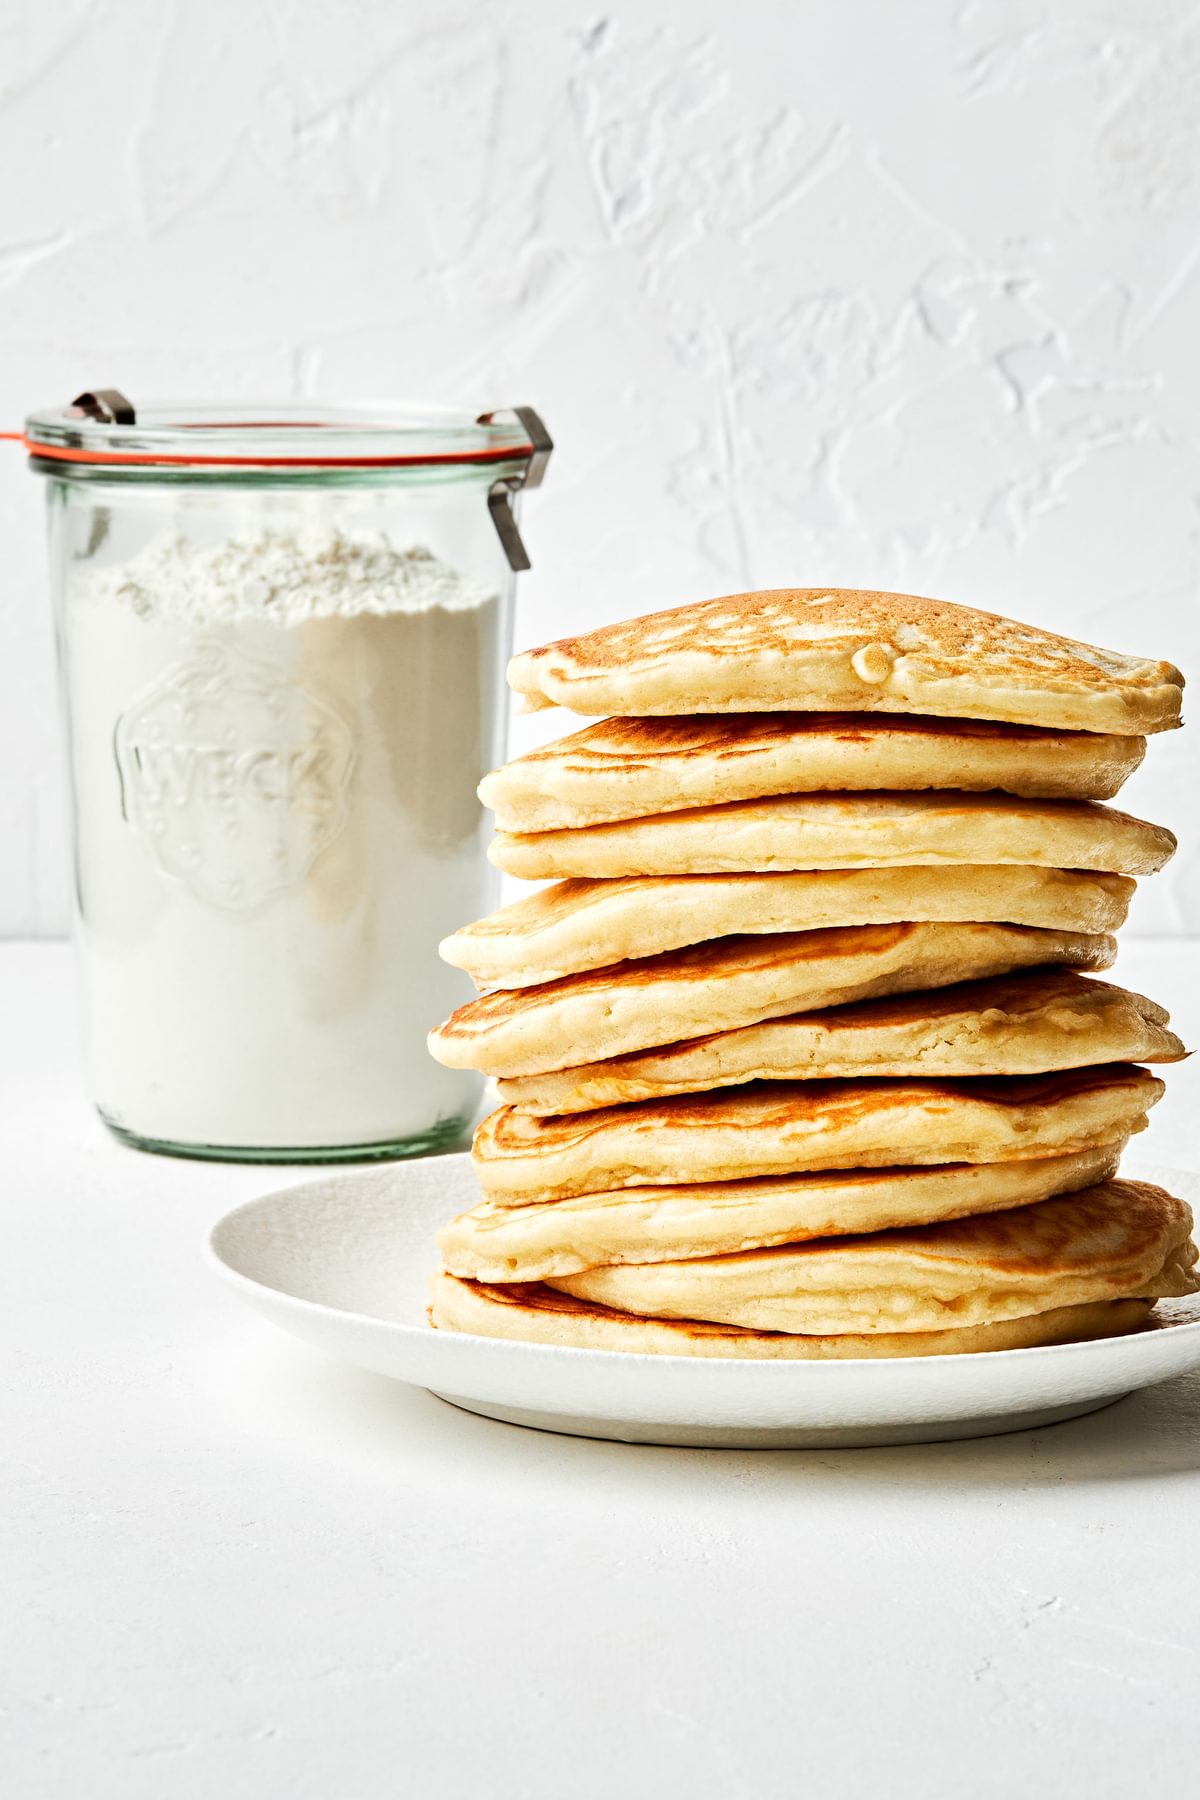 a stack of pancakes next to a jar of homemade pancake mix made with flour, sugar, baking powder, baking soda and salt